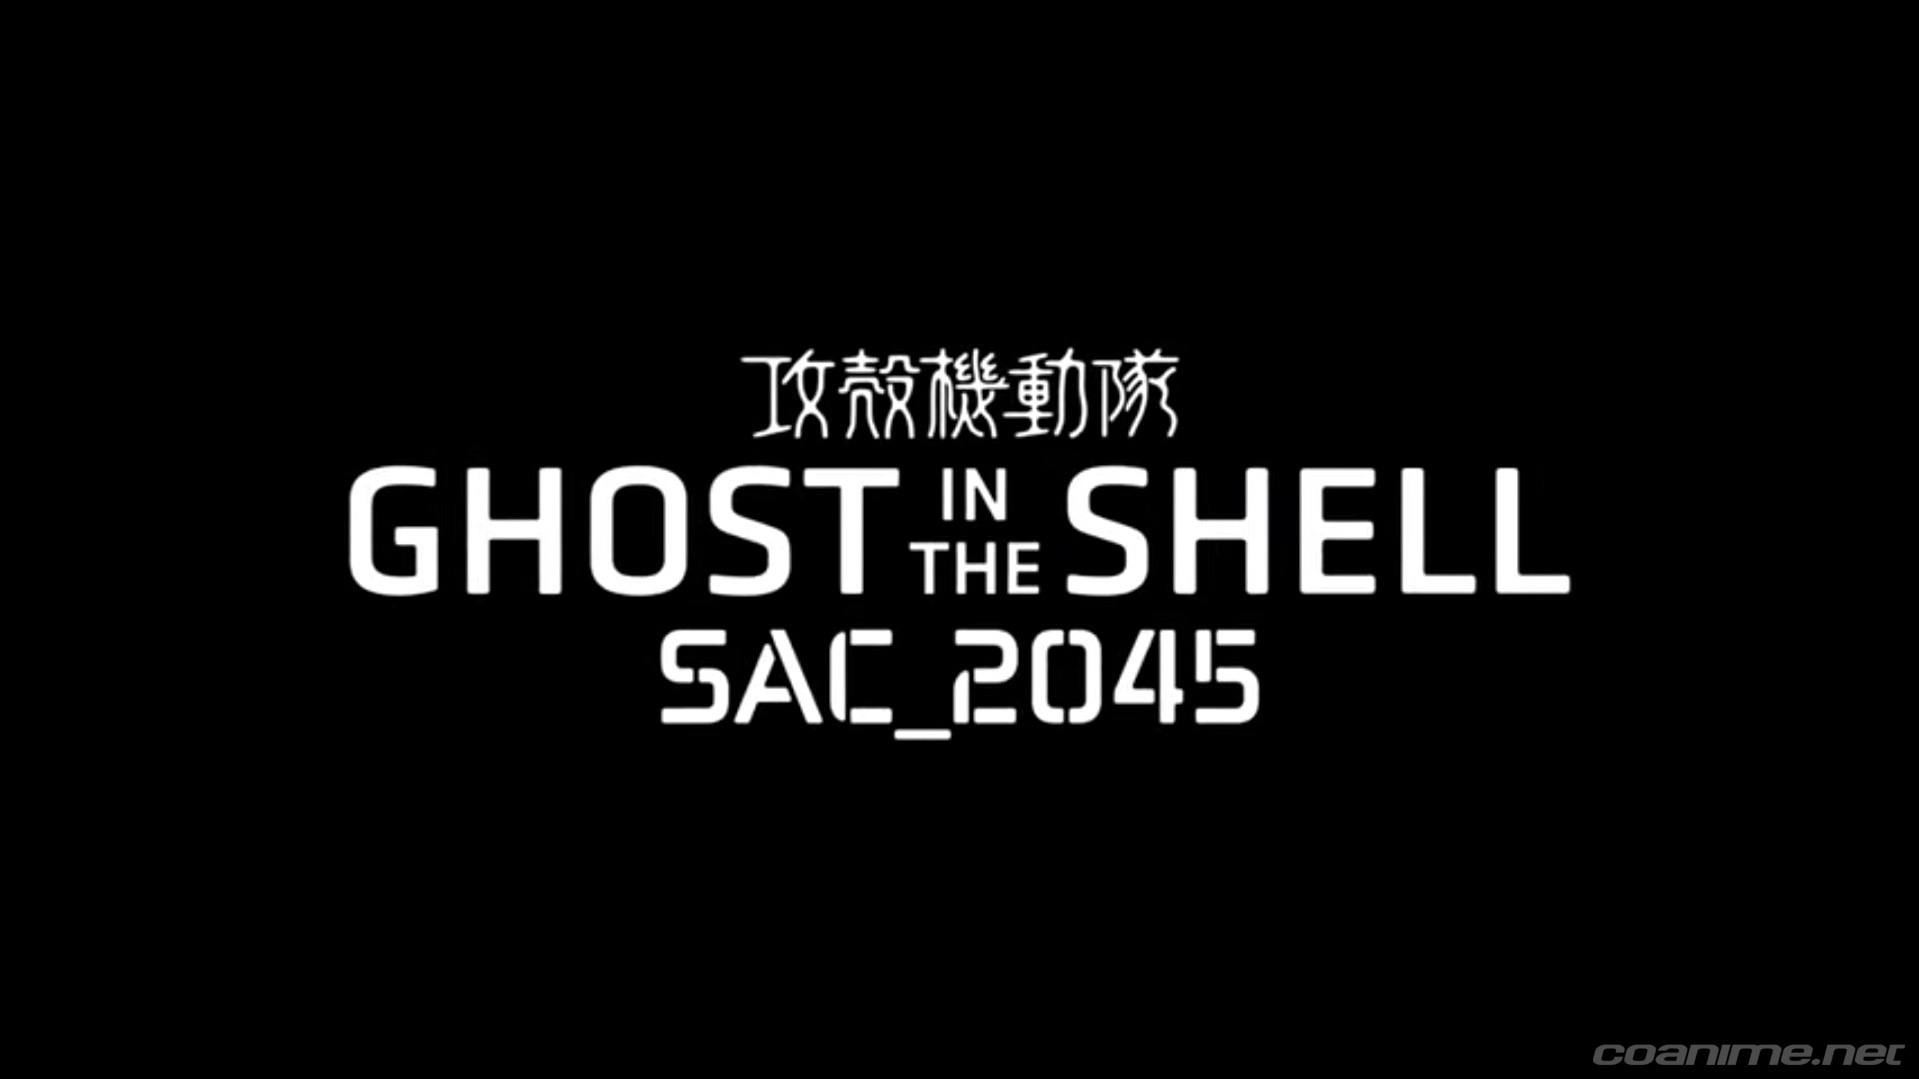 Revelan trailer del nuevo anime Ghost in the Shell: SAC_2045, se estrenara en Primavera del 2020